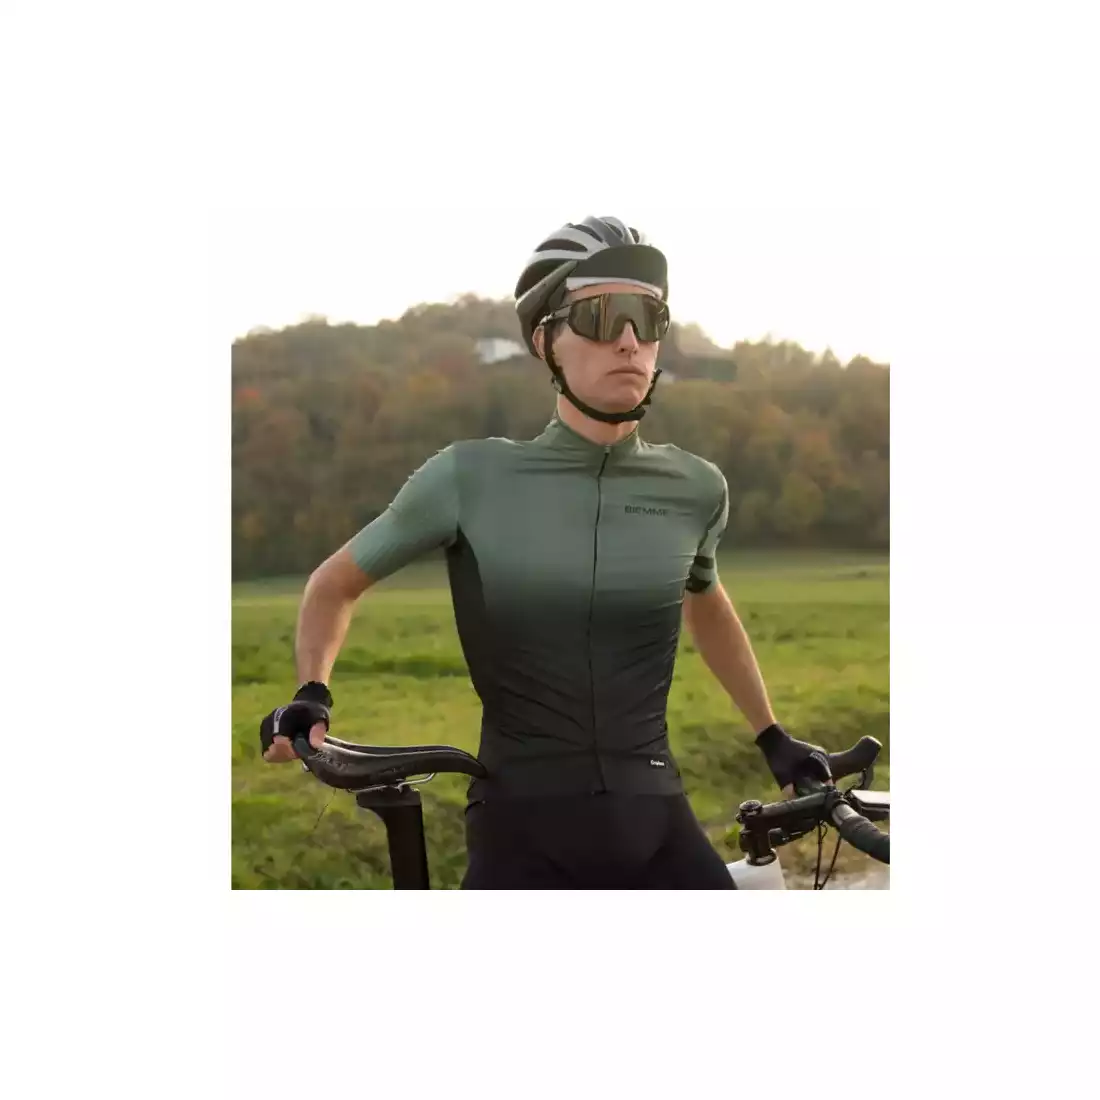 Biemme ACQUA pánsky cyklistický dres, zelená